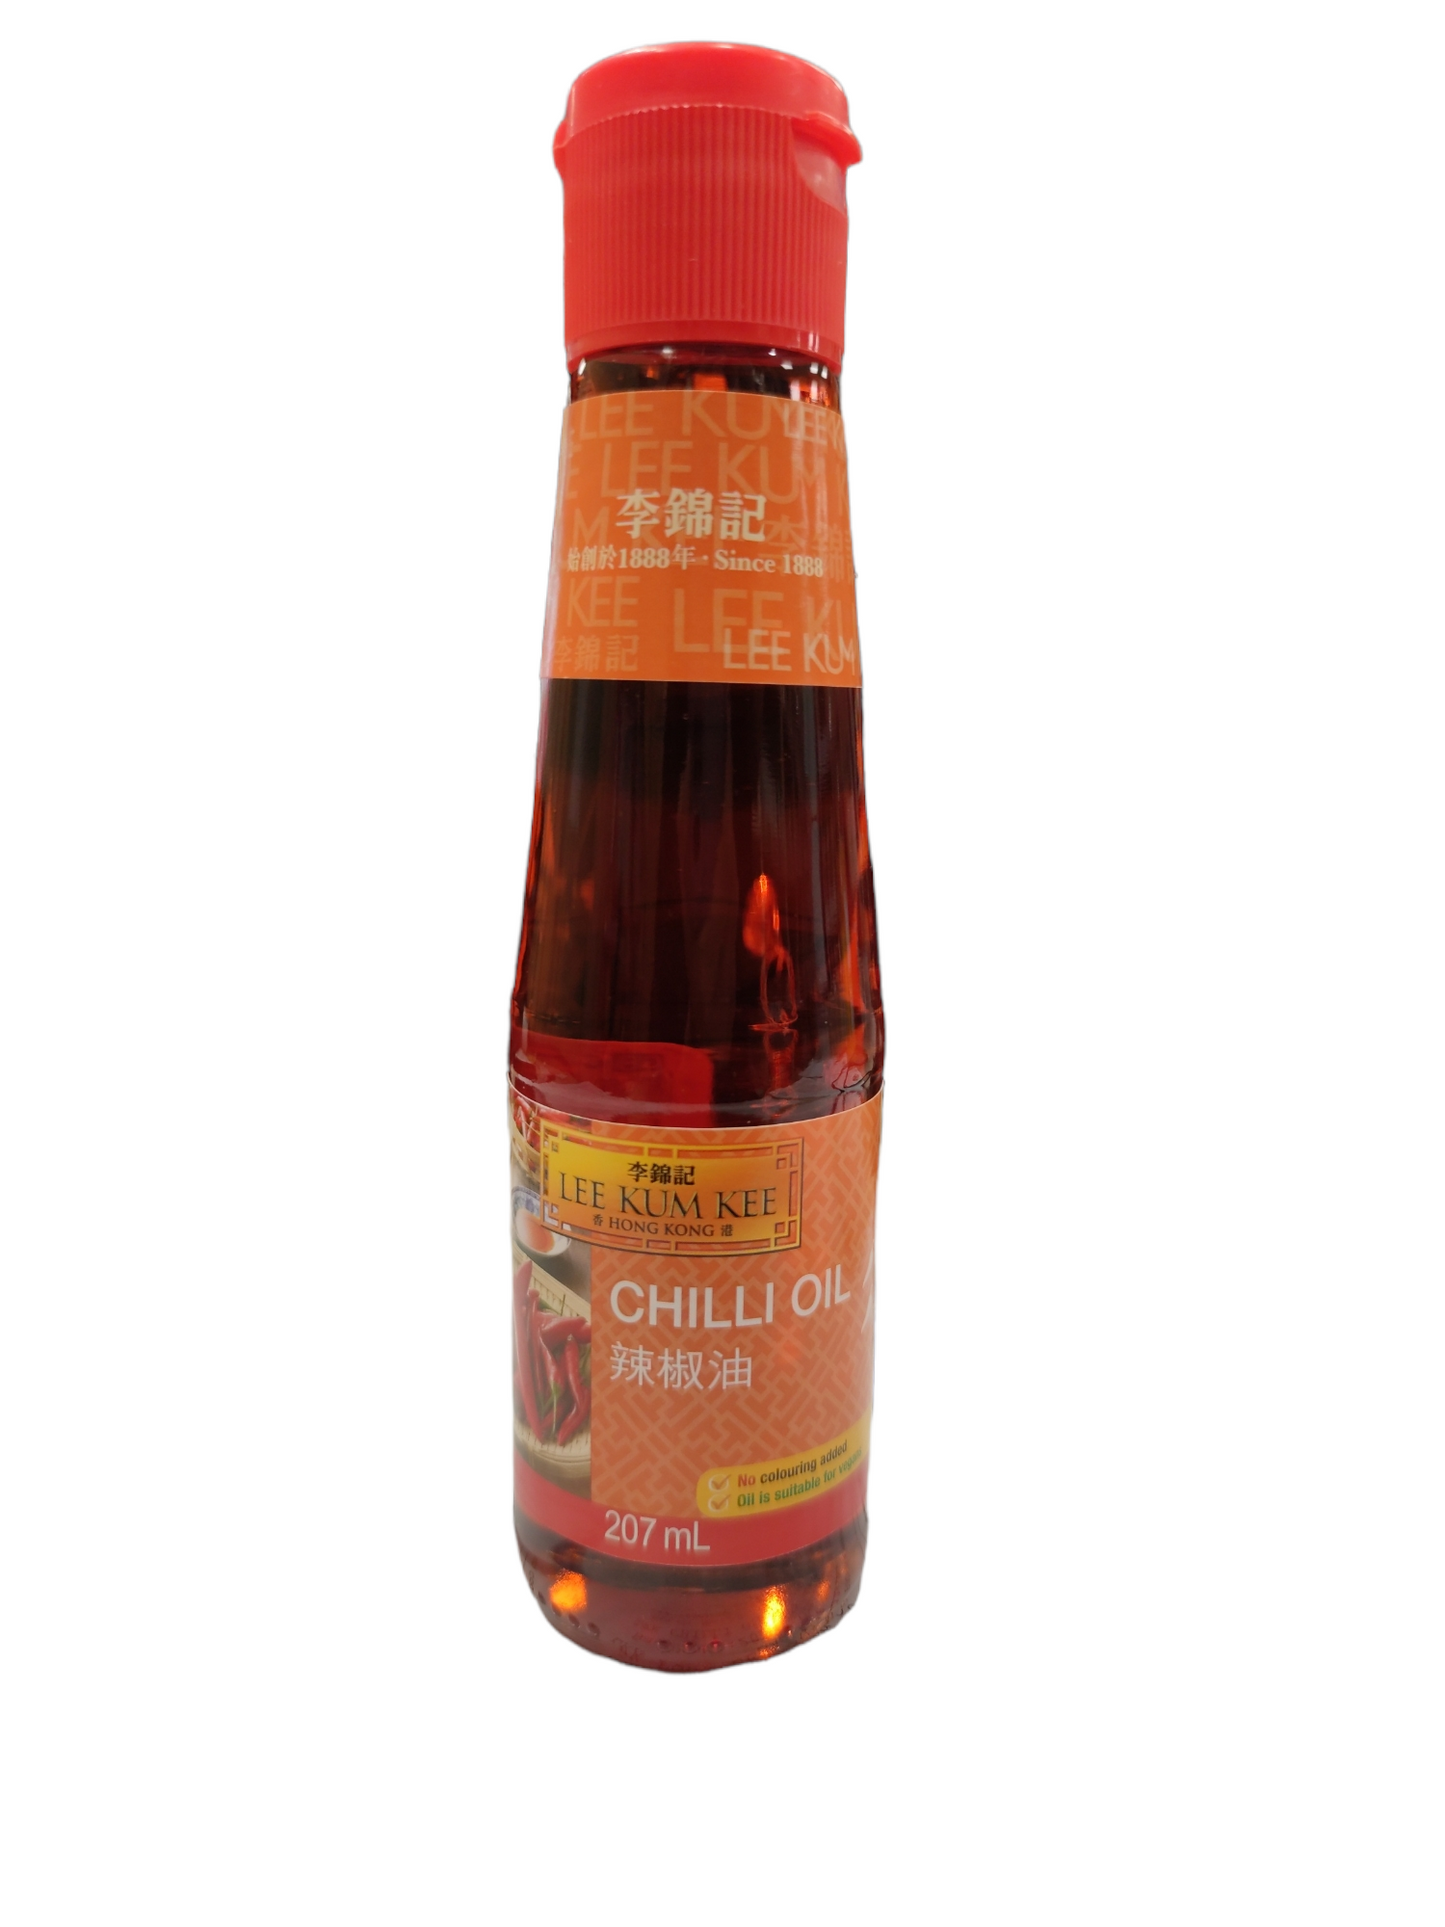 LKK Chilli Oil 207ml 李錦記辣椒油